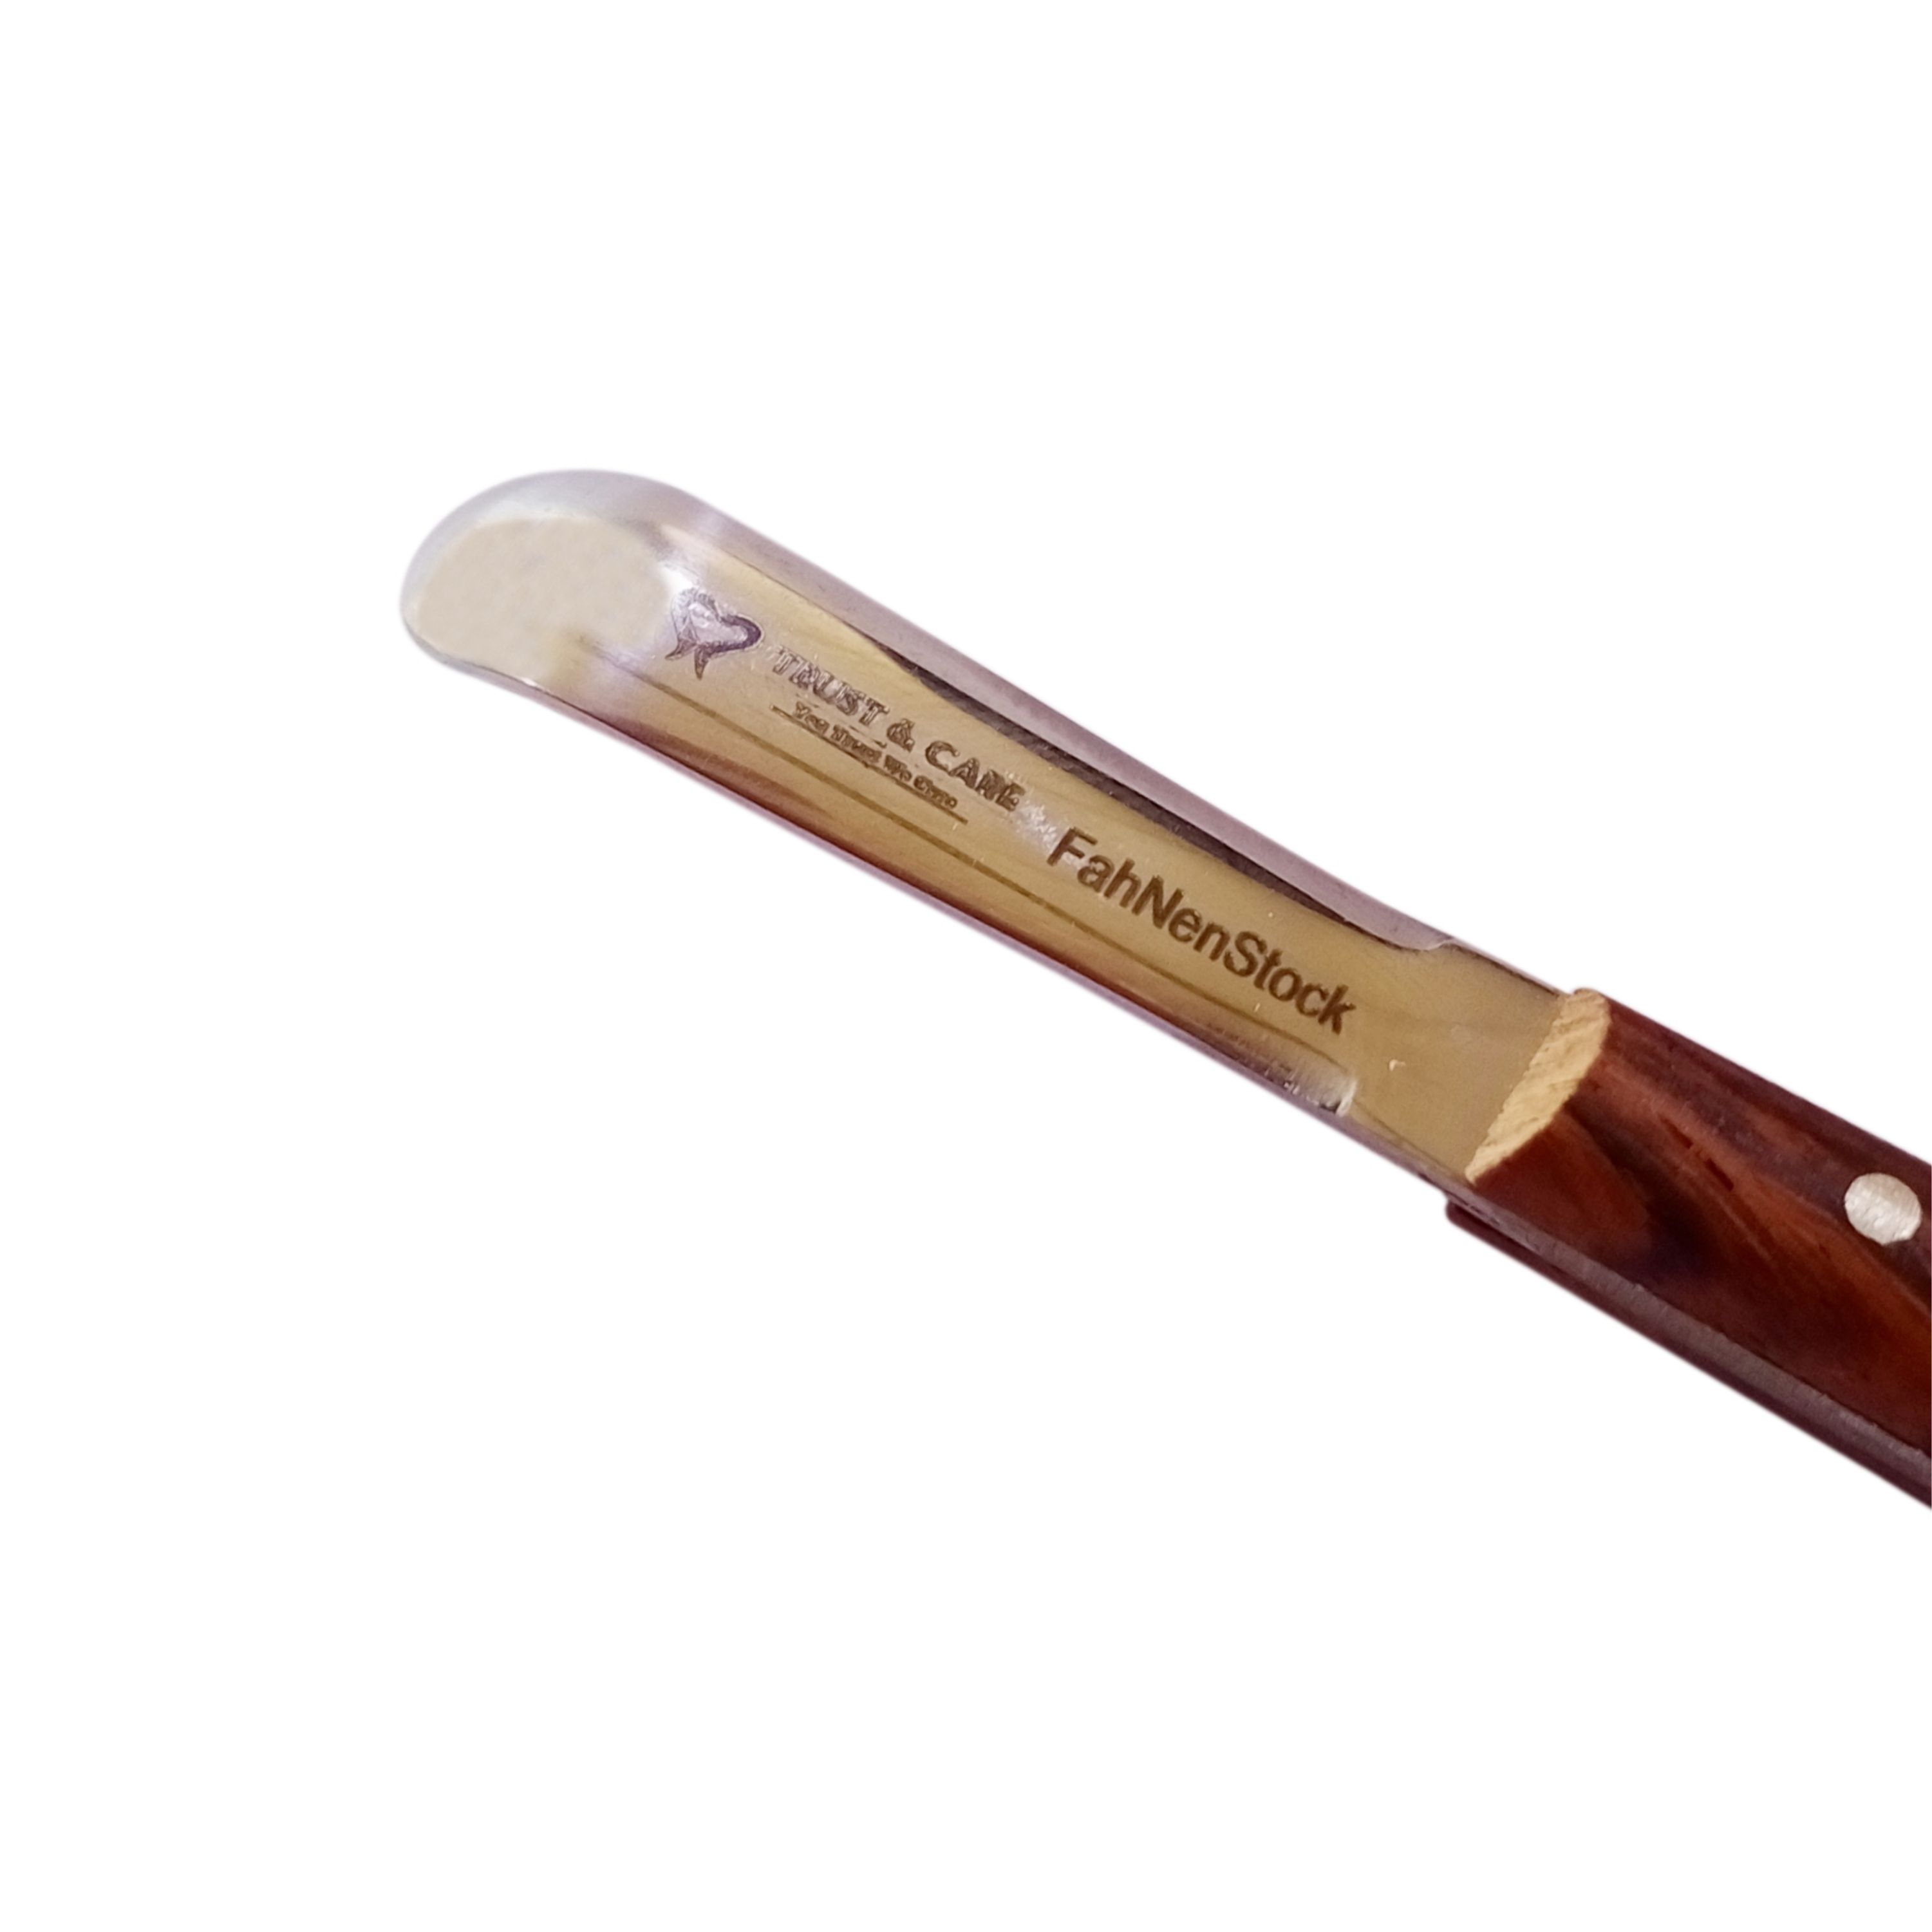 Trust & Care Wooden Wax Knife Fahnenstock 17 Cm